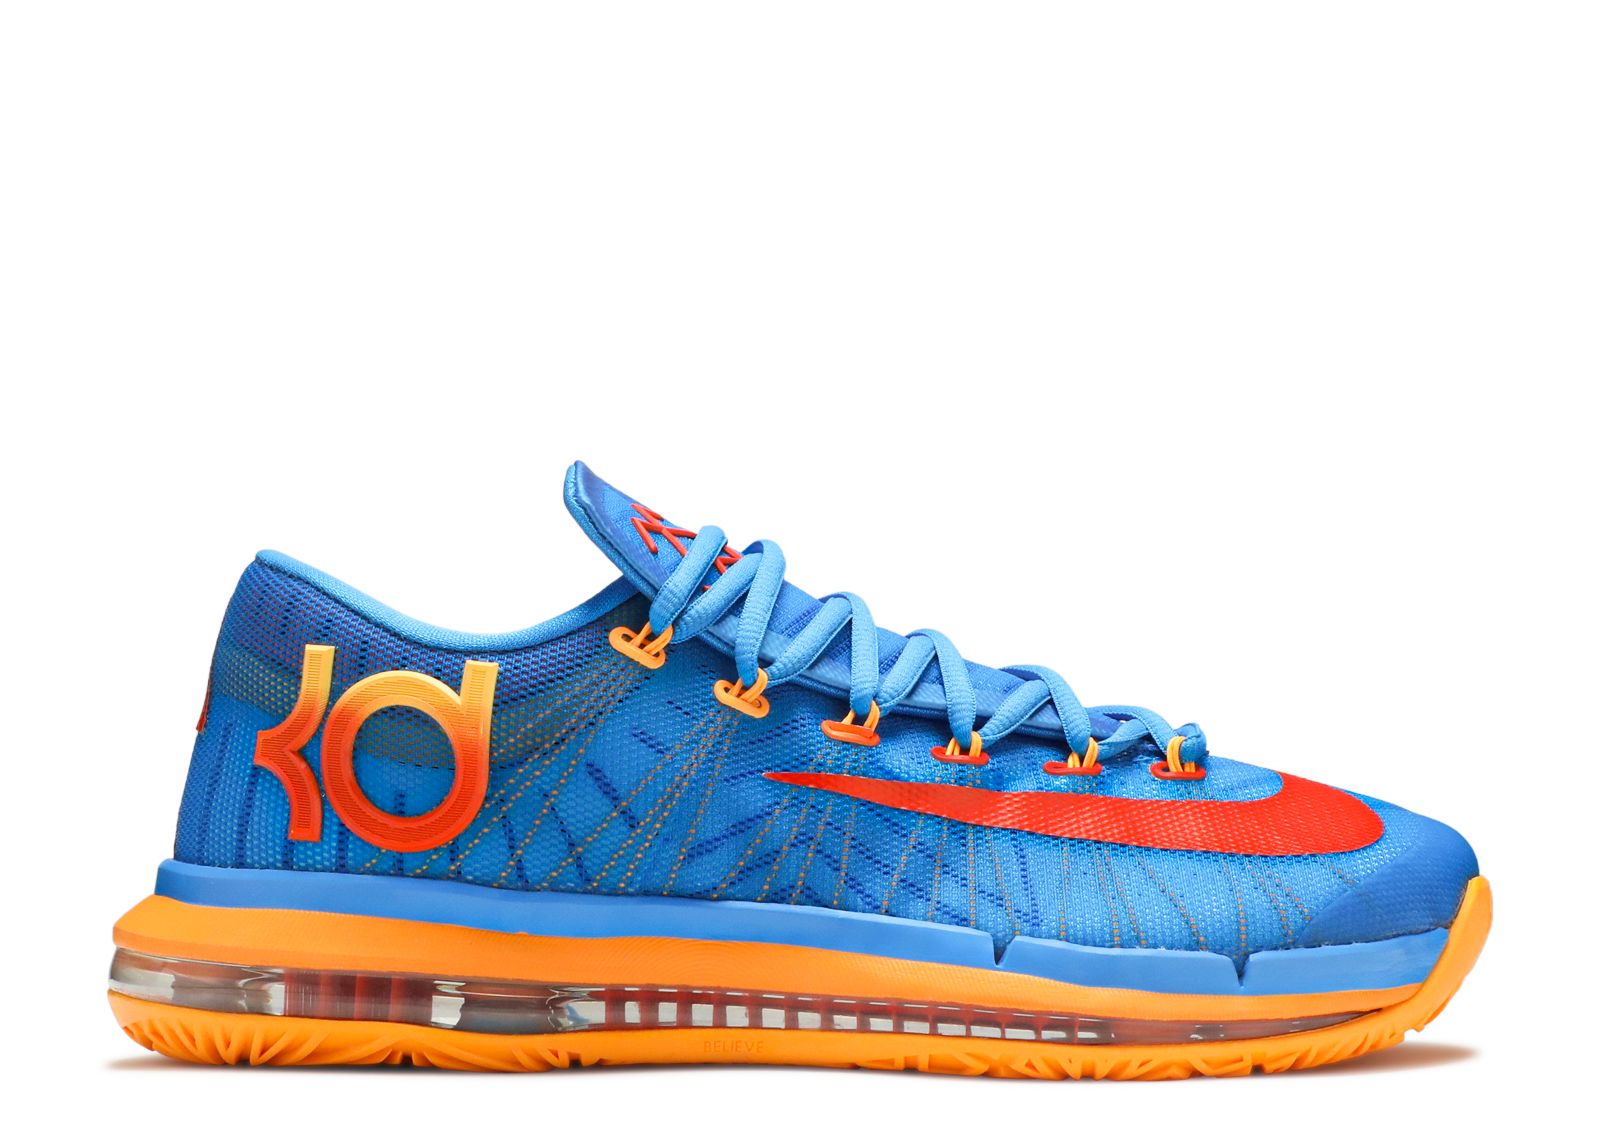 kd 6 orange and blue